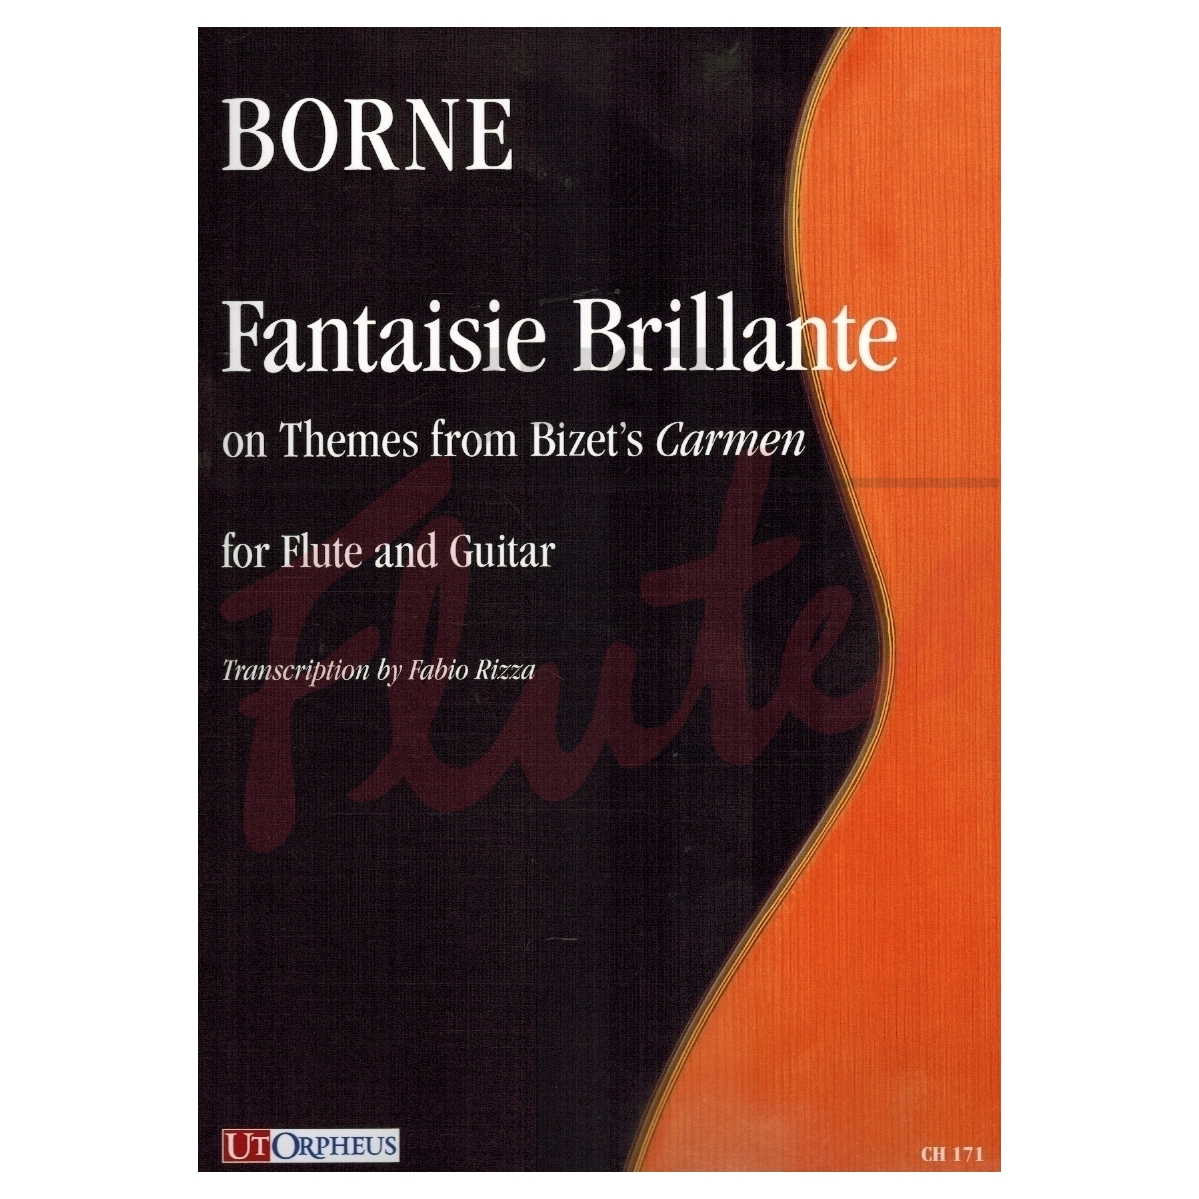 Fantasie Brillante on Themes from Bizet's Carmen